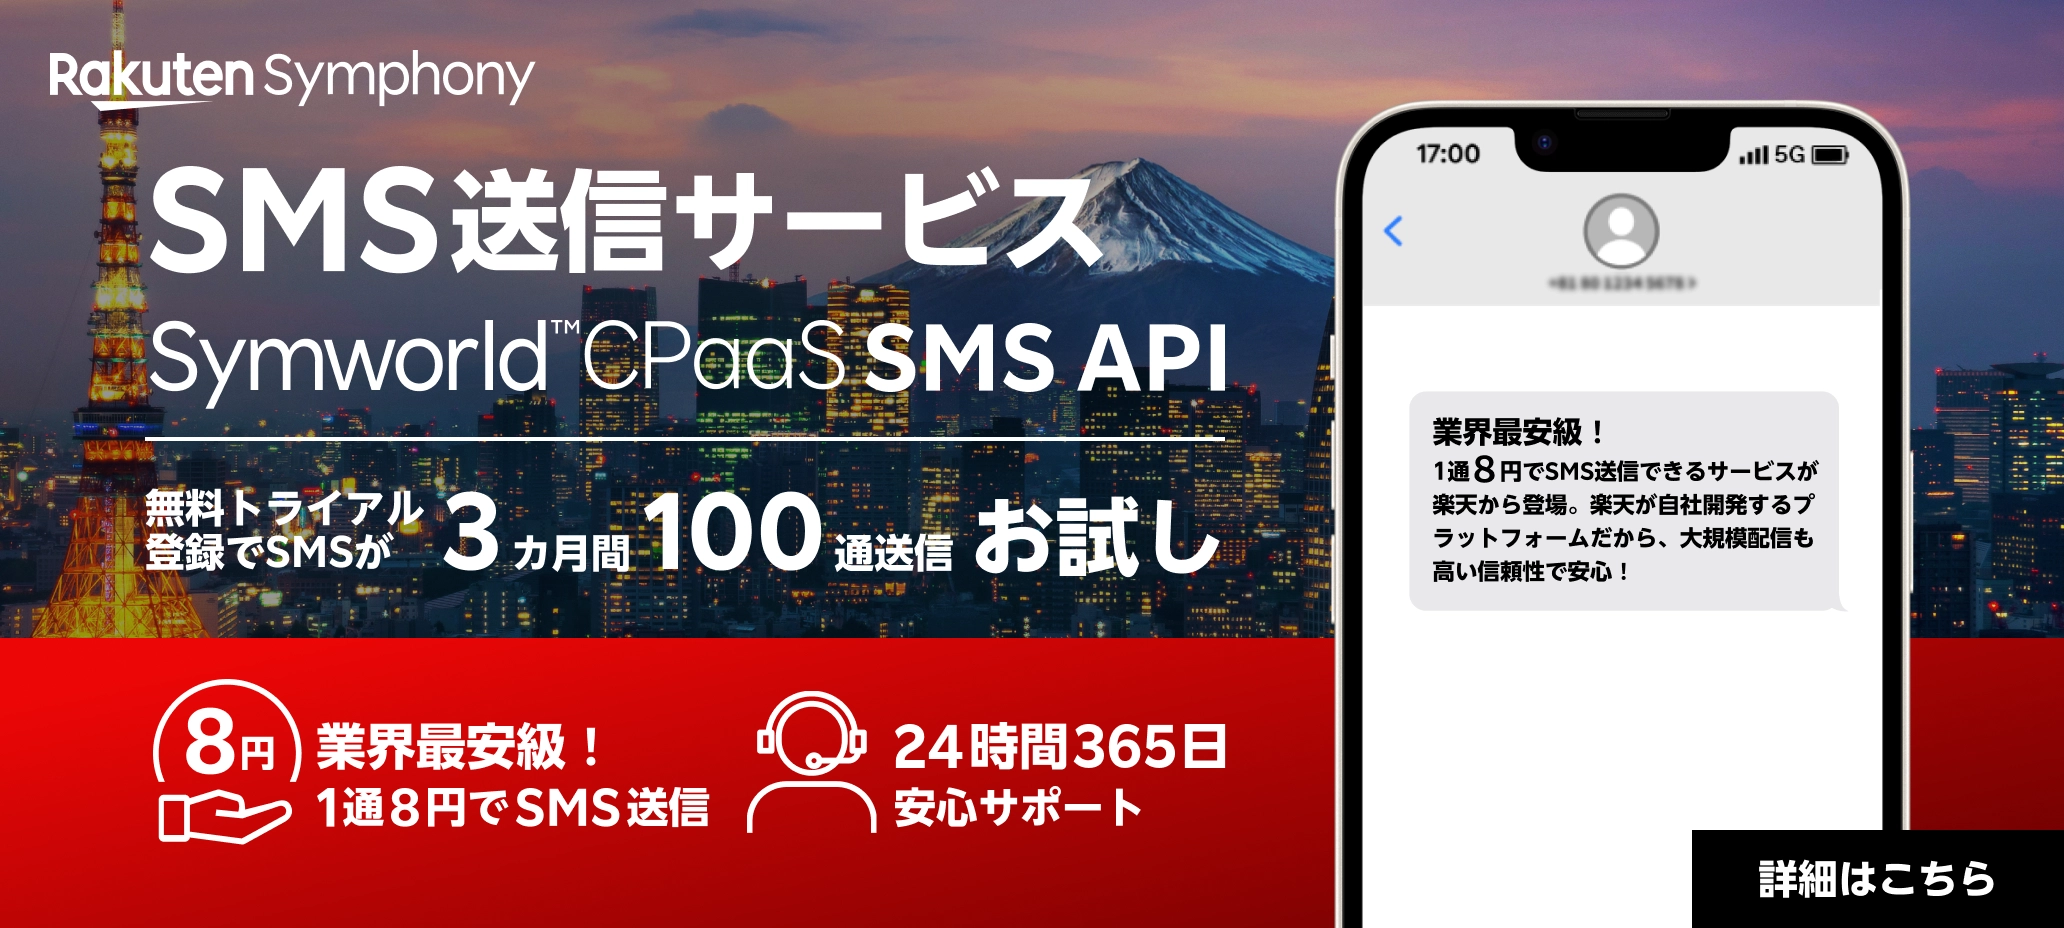 SMS送信サービス Symworld CPaaS SMS API | 無料トライアル登録でSNSが3カ月間100通送信お試し